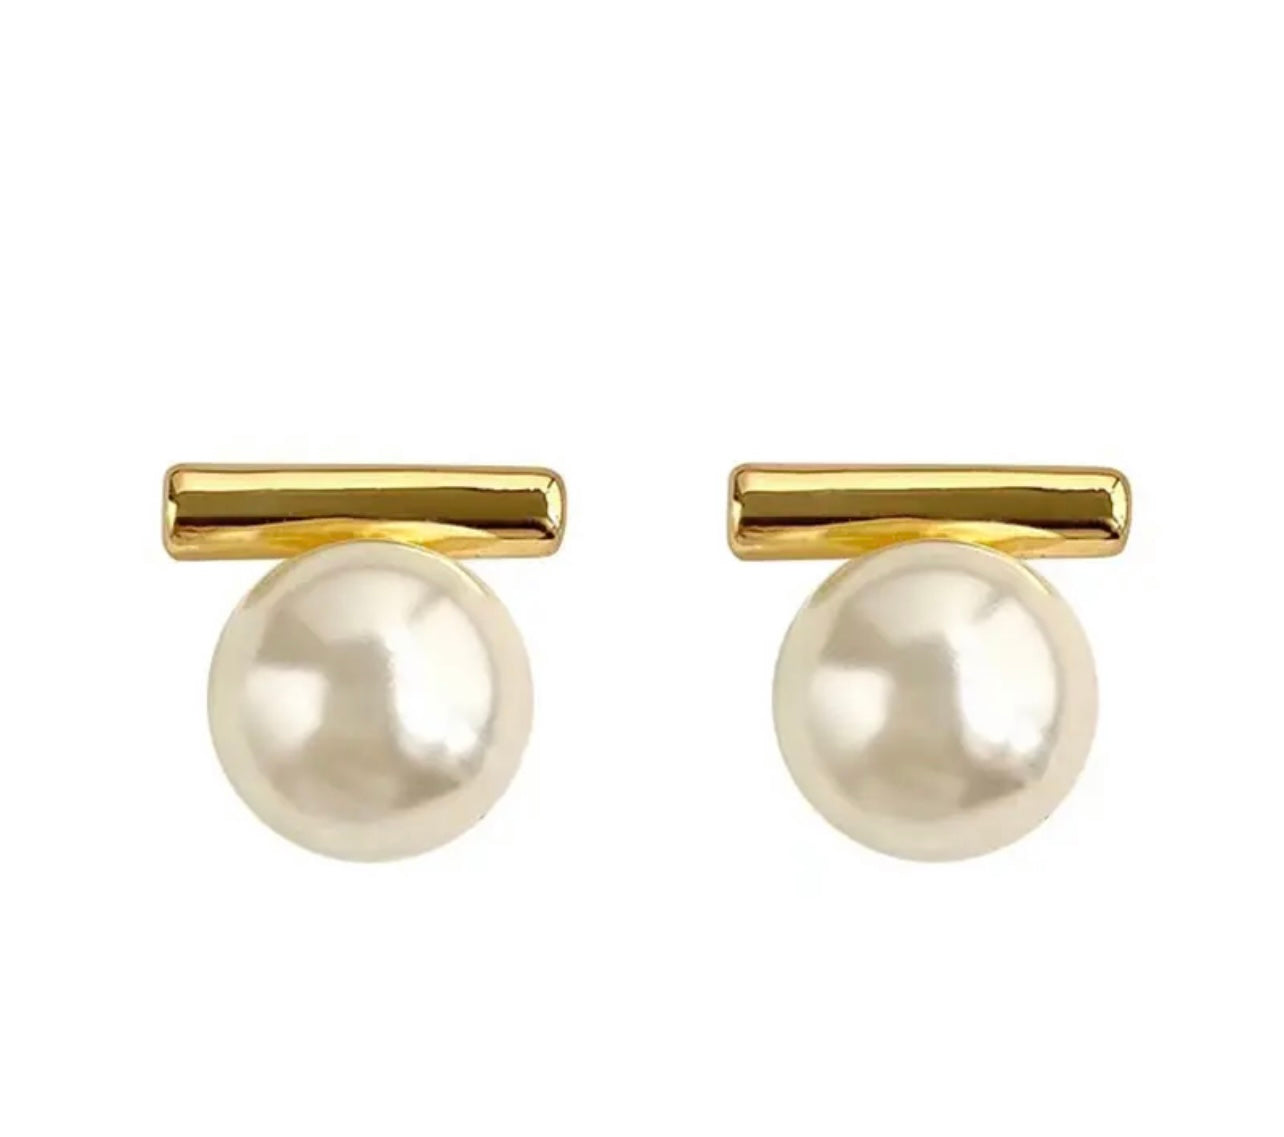 Petite White/Gray Pebble Pearl Stud Earrings